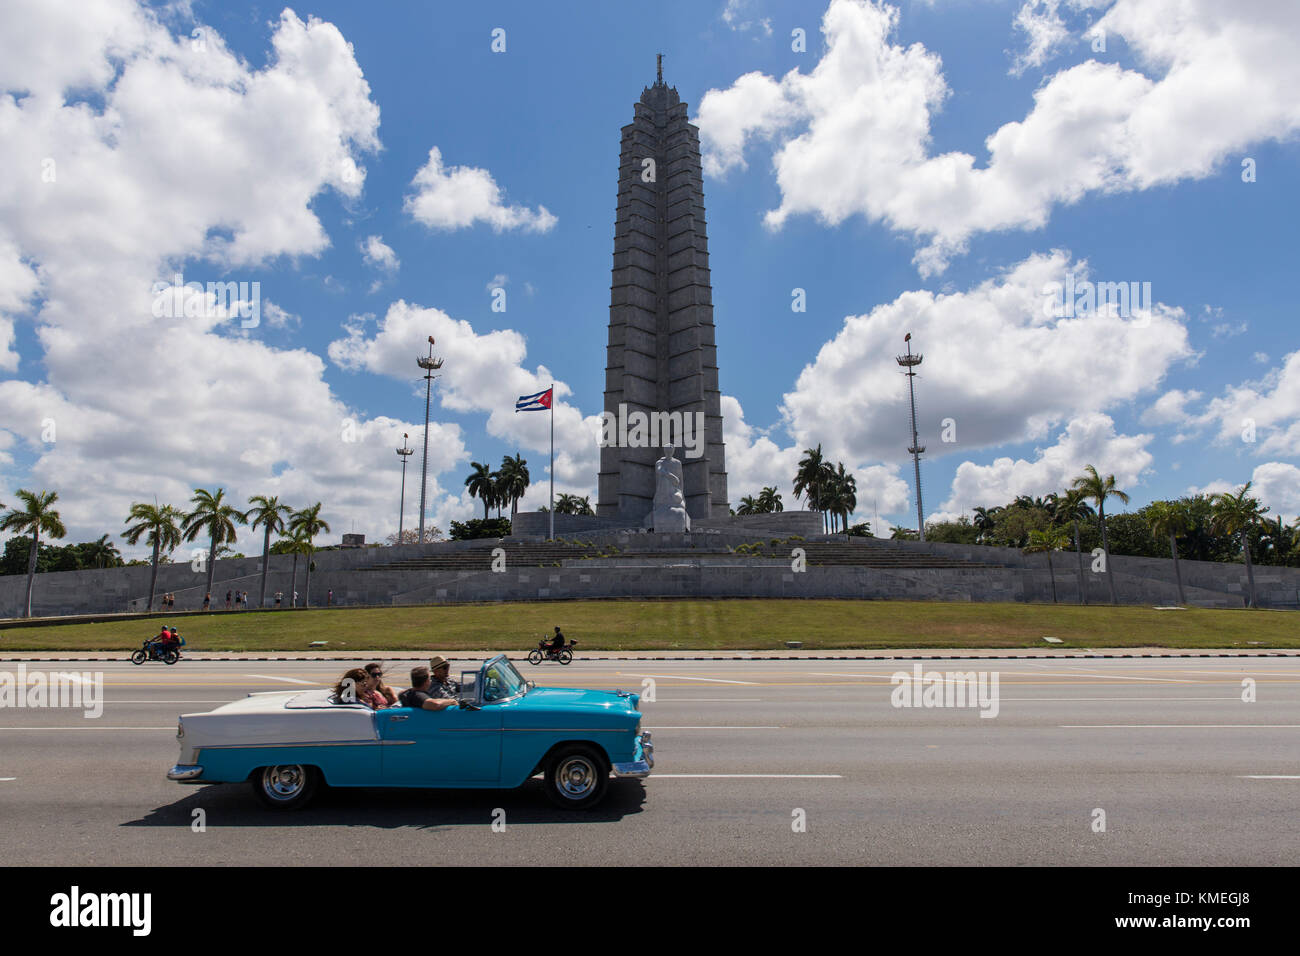 Tourists take a classic car ride by Plaza de la Revolución in Havana,Cuba. Stock Photo